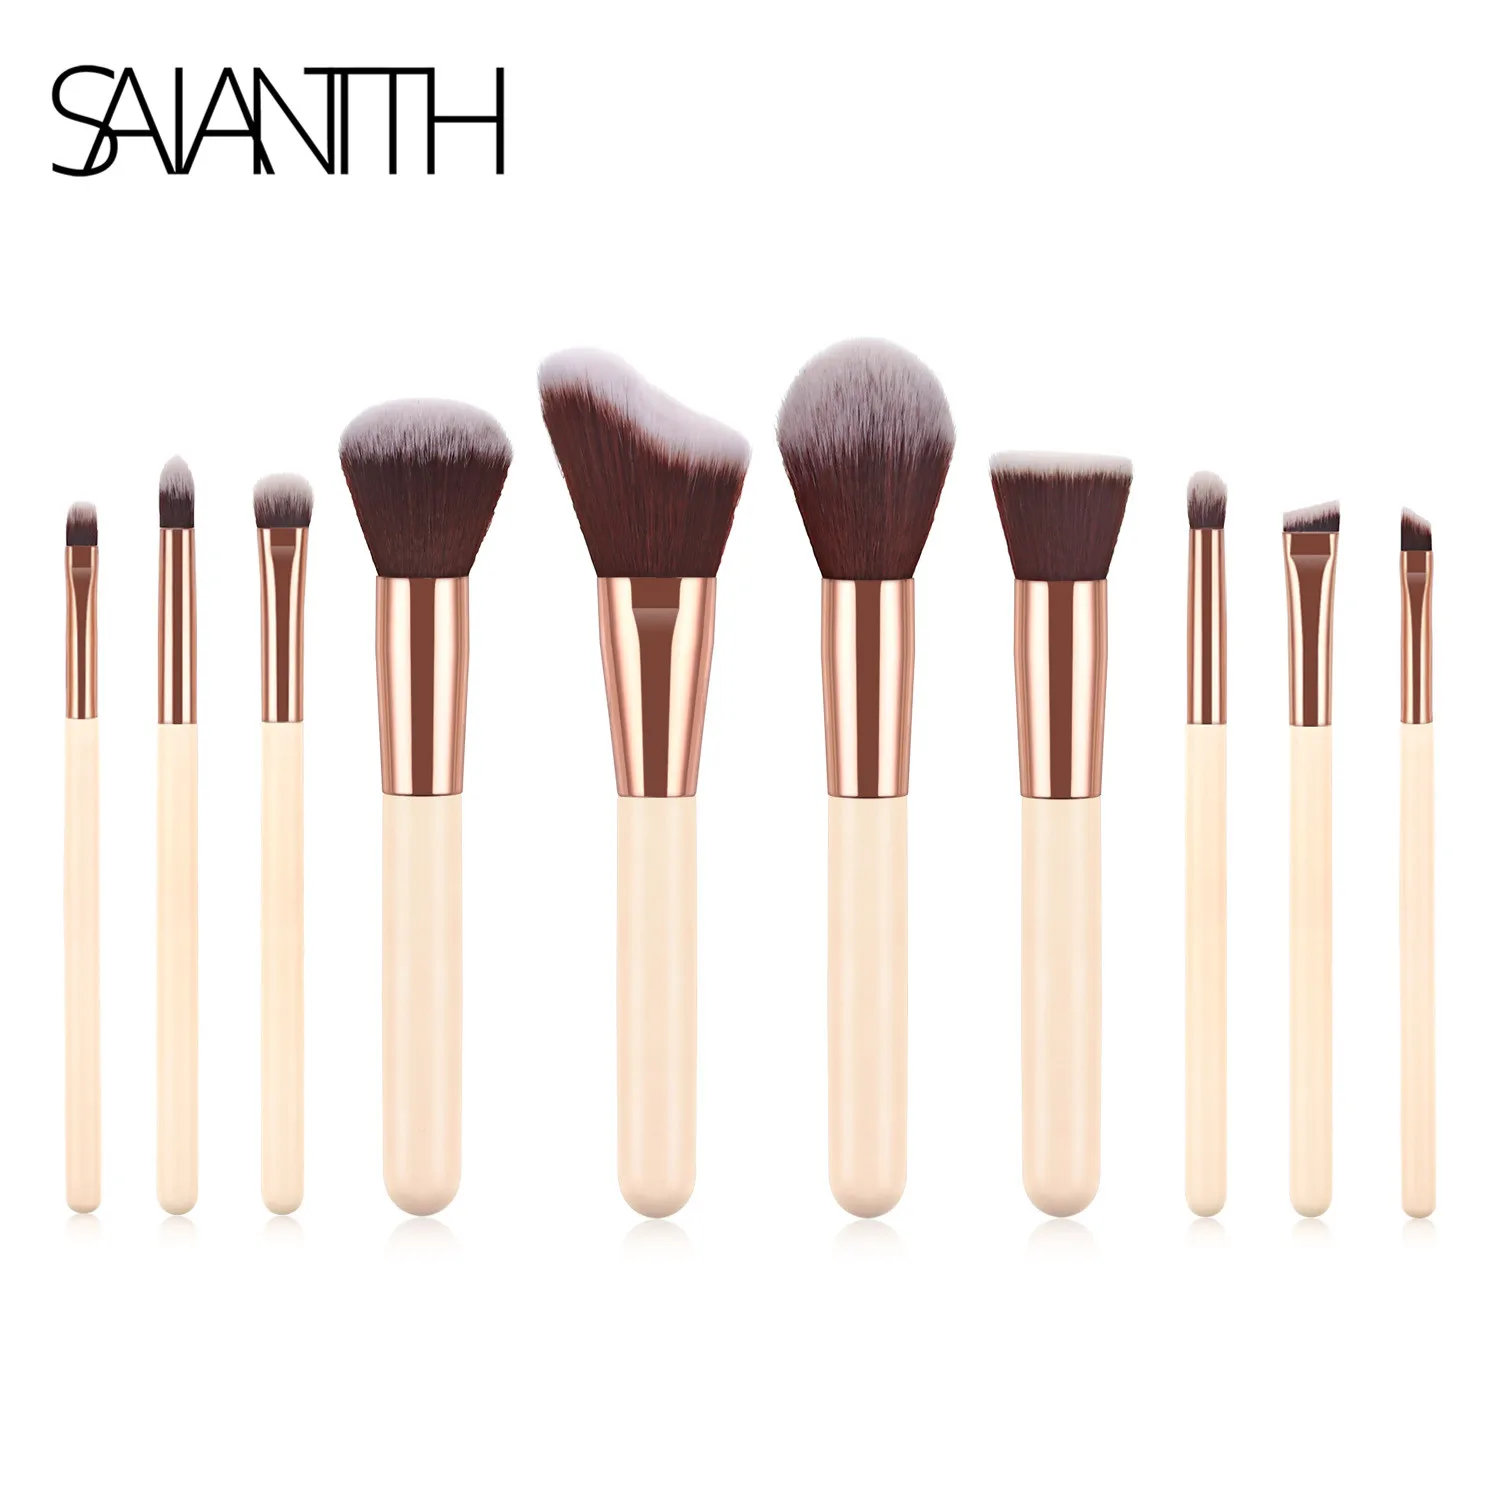 

Saiantth 10pcs smooth makeup brushes set pink wood make up tool professional cosmetic foundation eyeshadow powder blush eyebrow